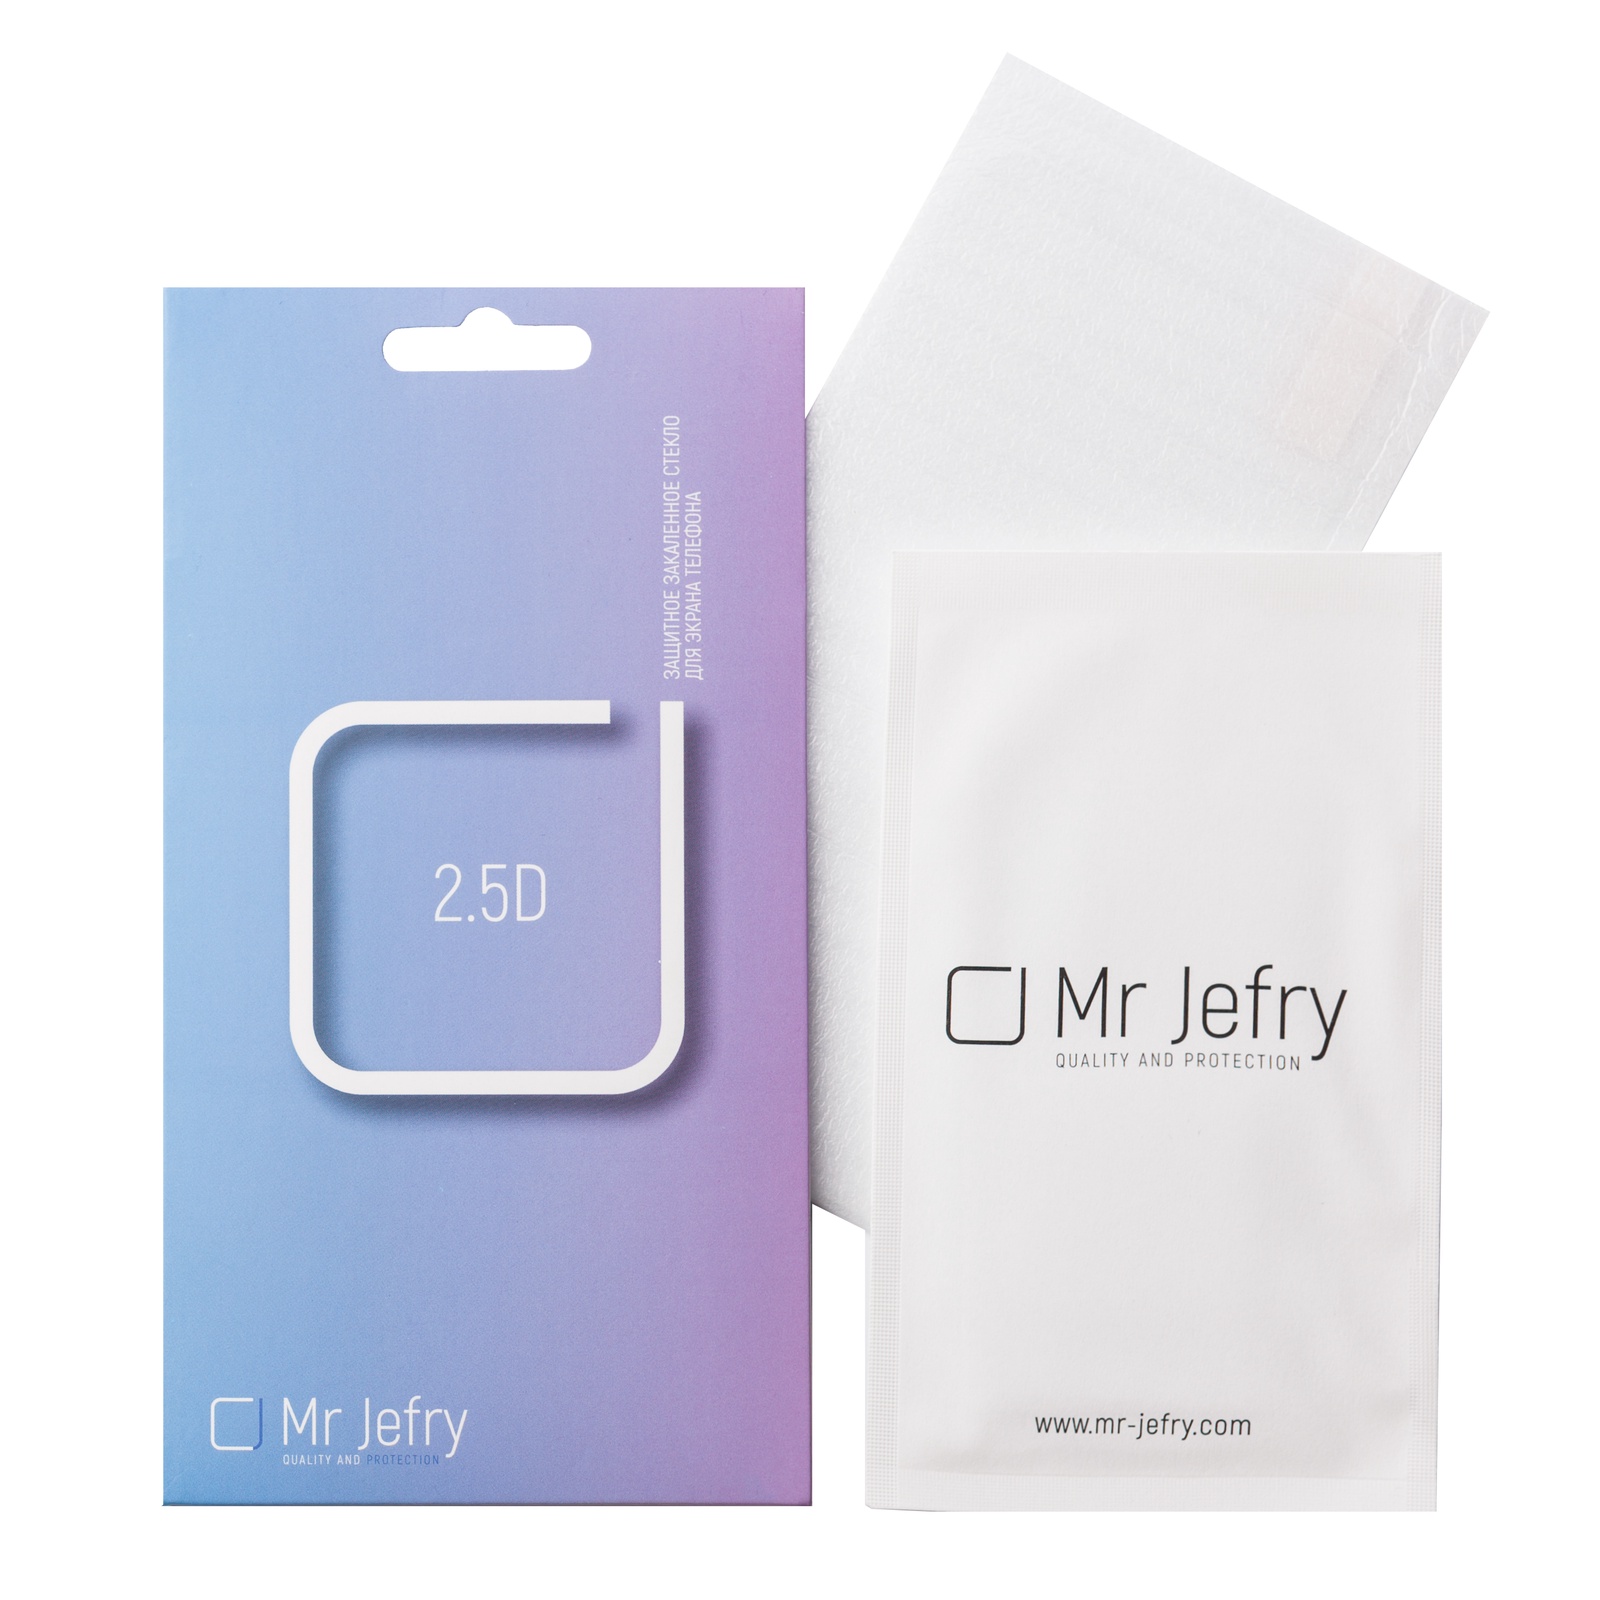 фото Mr Jefry стекло защитное (многослойное) 2,5D для IPhone x/xs